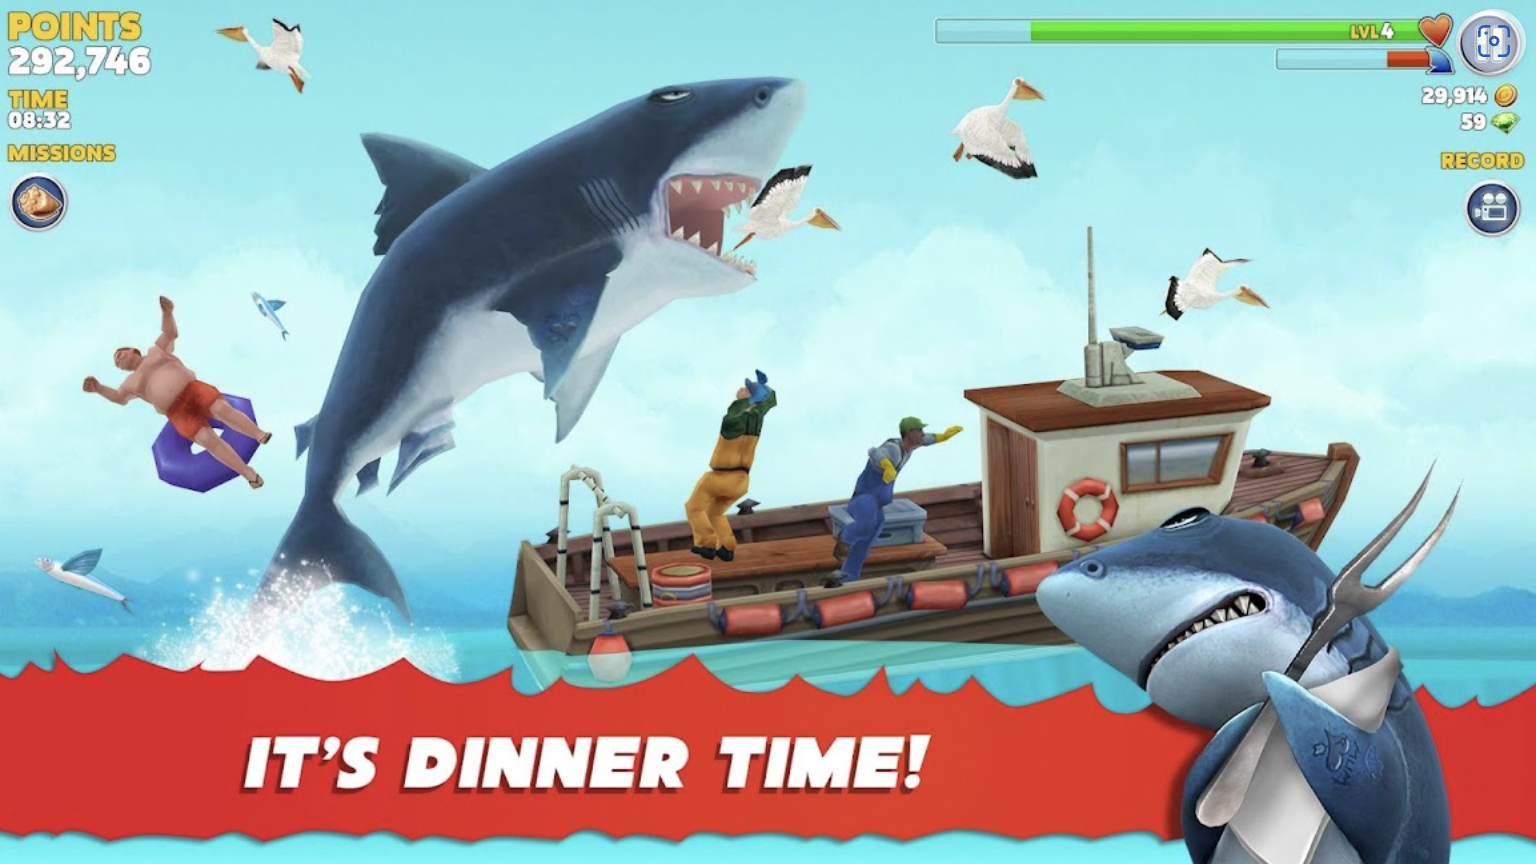 Play Hungry Shark Evolution Unlocked Gems & Coins FREE